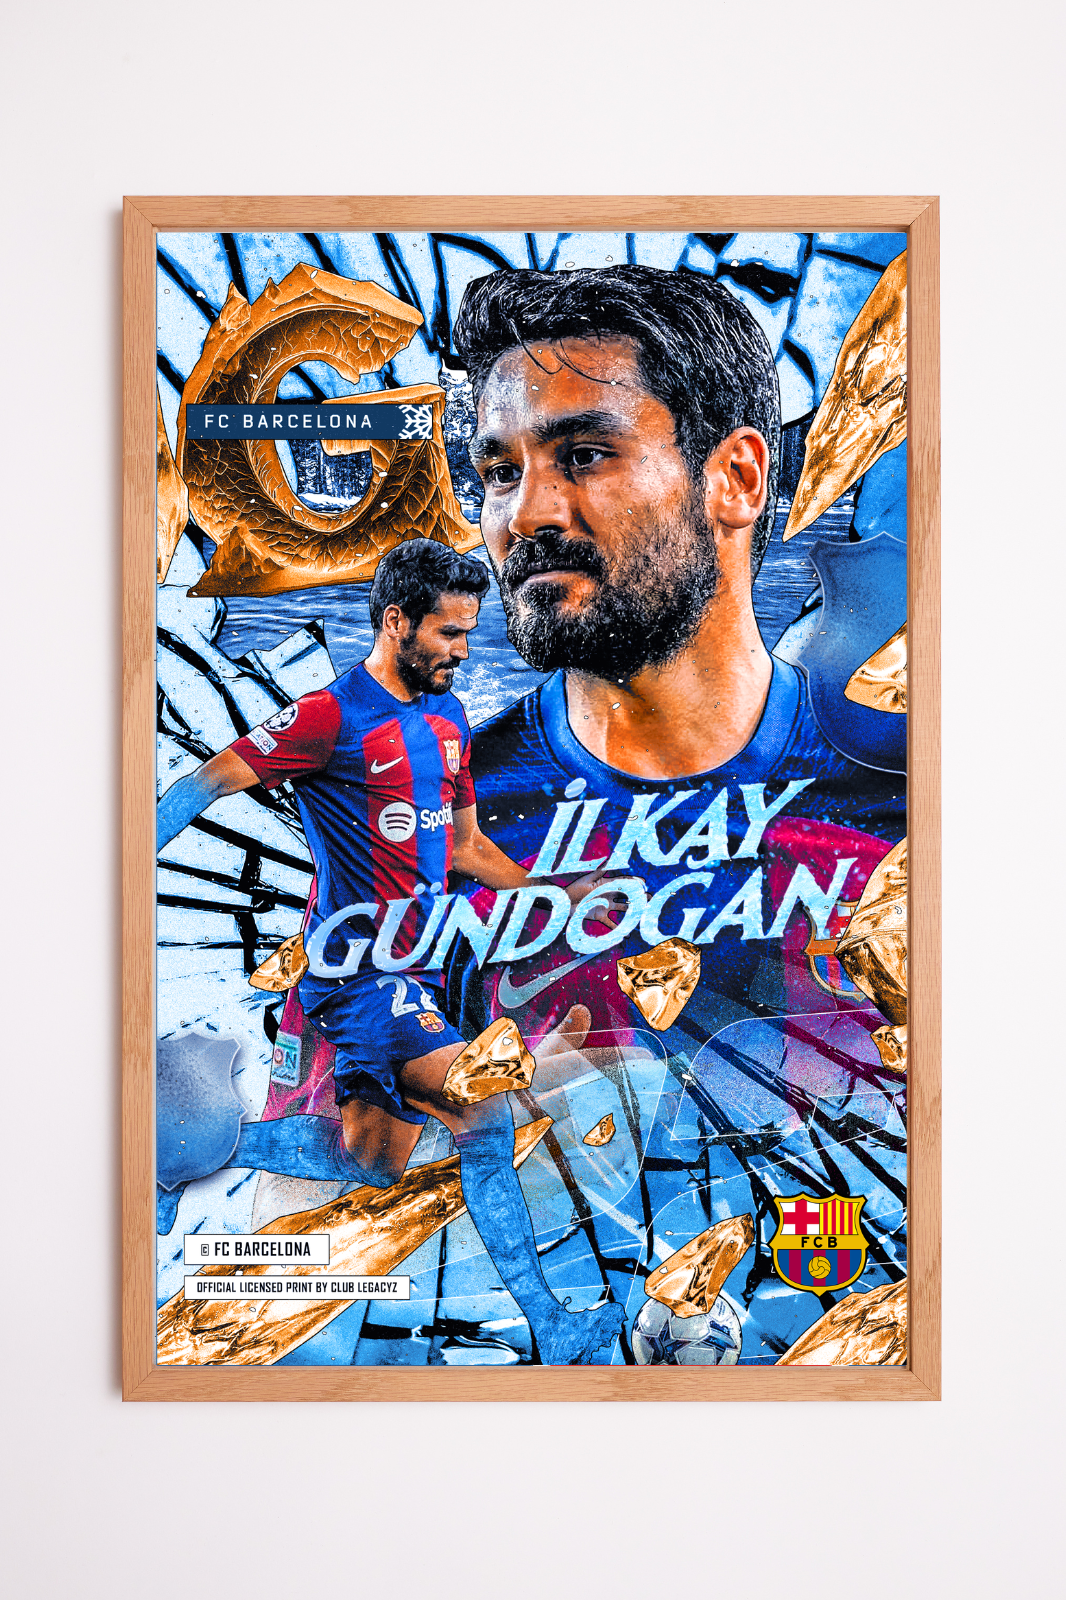 FC Barcelona - Poster Frozen İlkay Gündogan Frozen 100 exemplaires